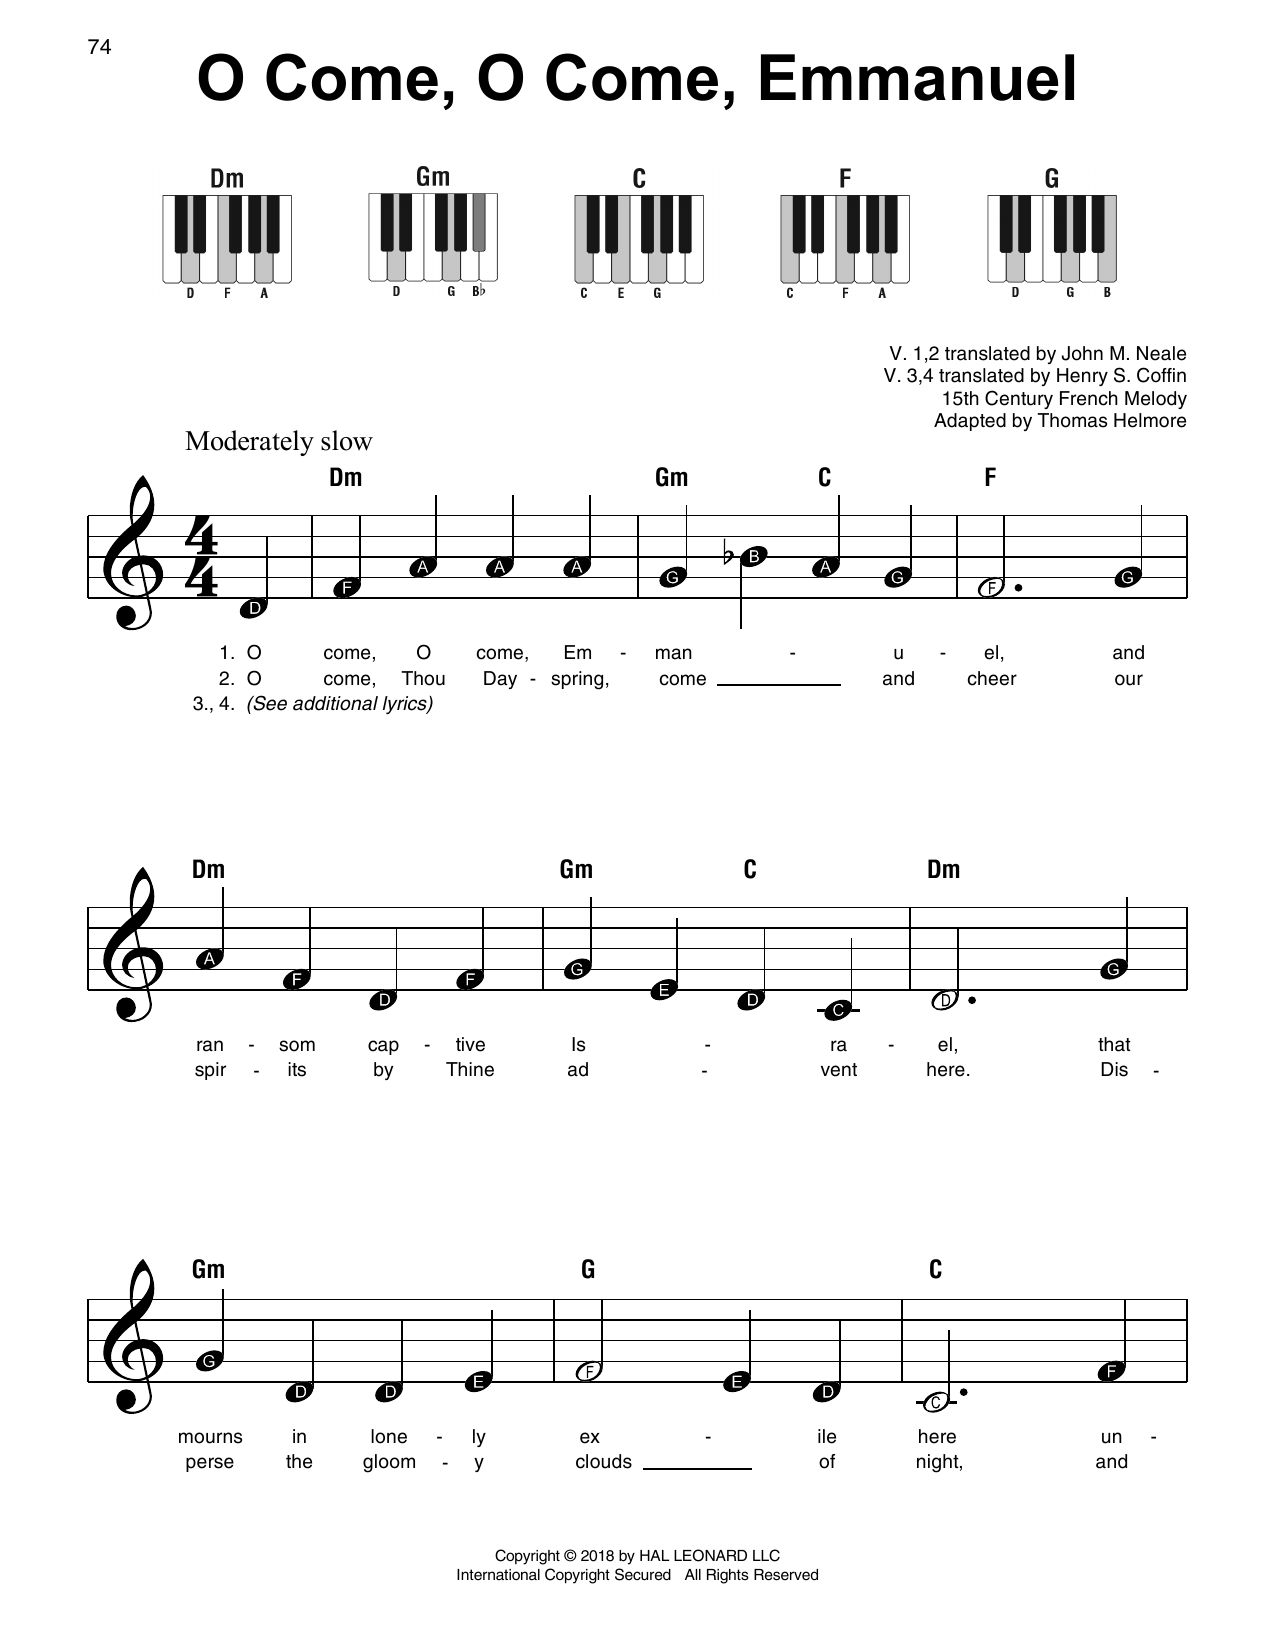 Christmas Carol O Come, O Come, Emmanuel sheet music notes and chords arranged for Flute and Piano